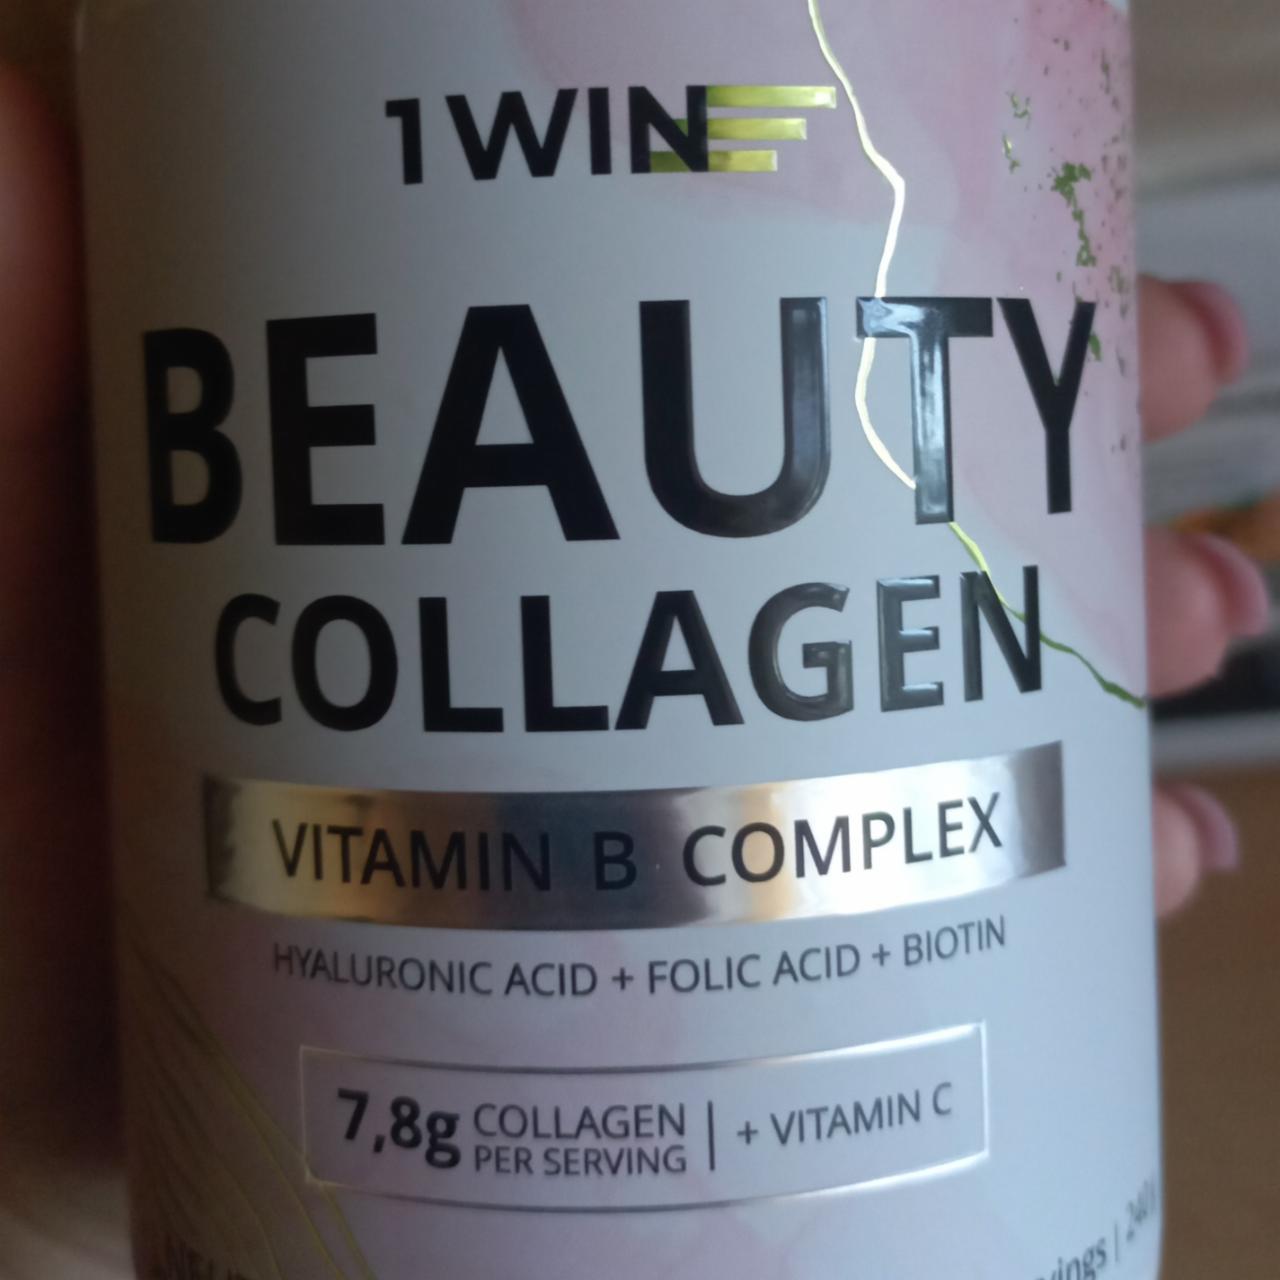 Фото - Beauty Collagen Vitamine B 1WIN